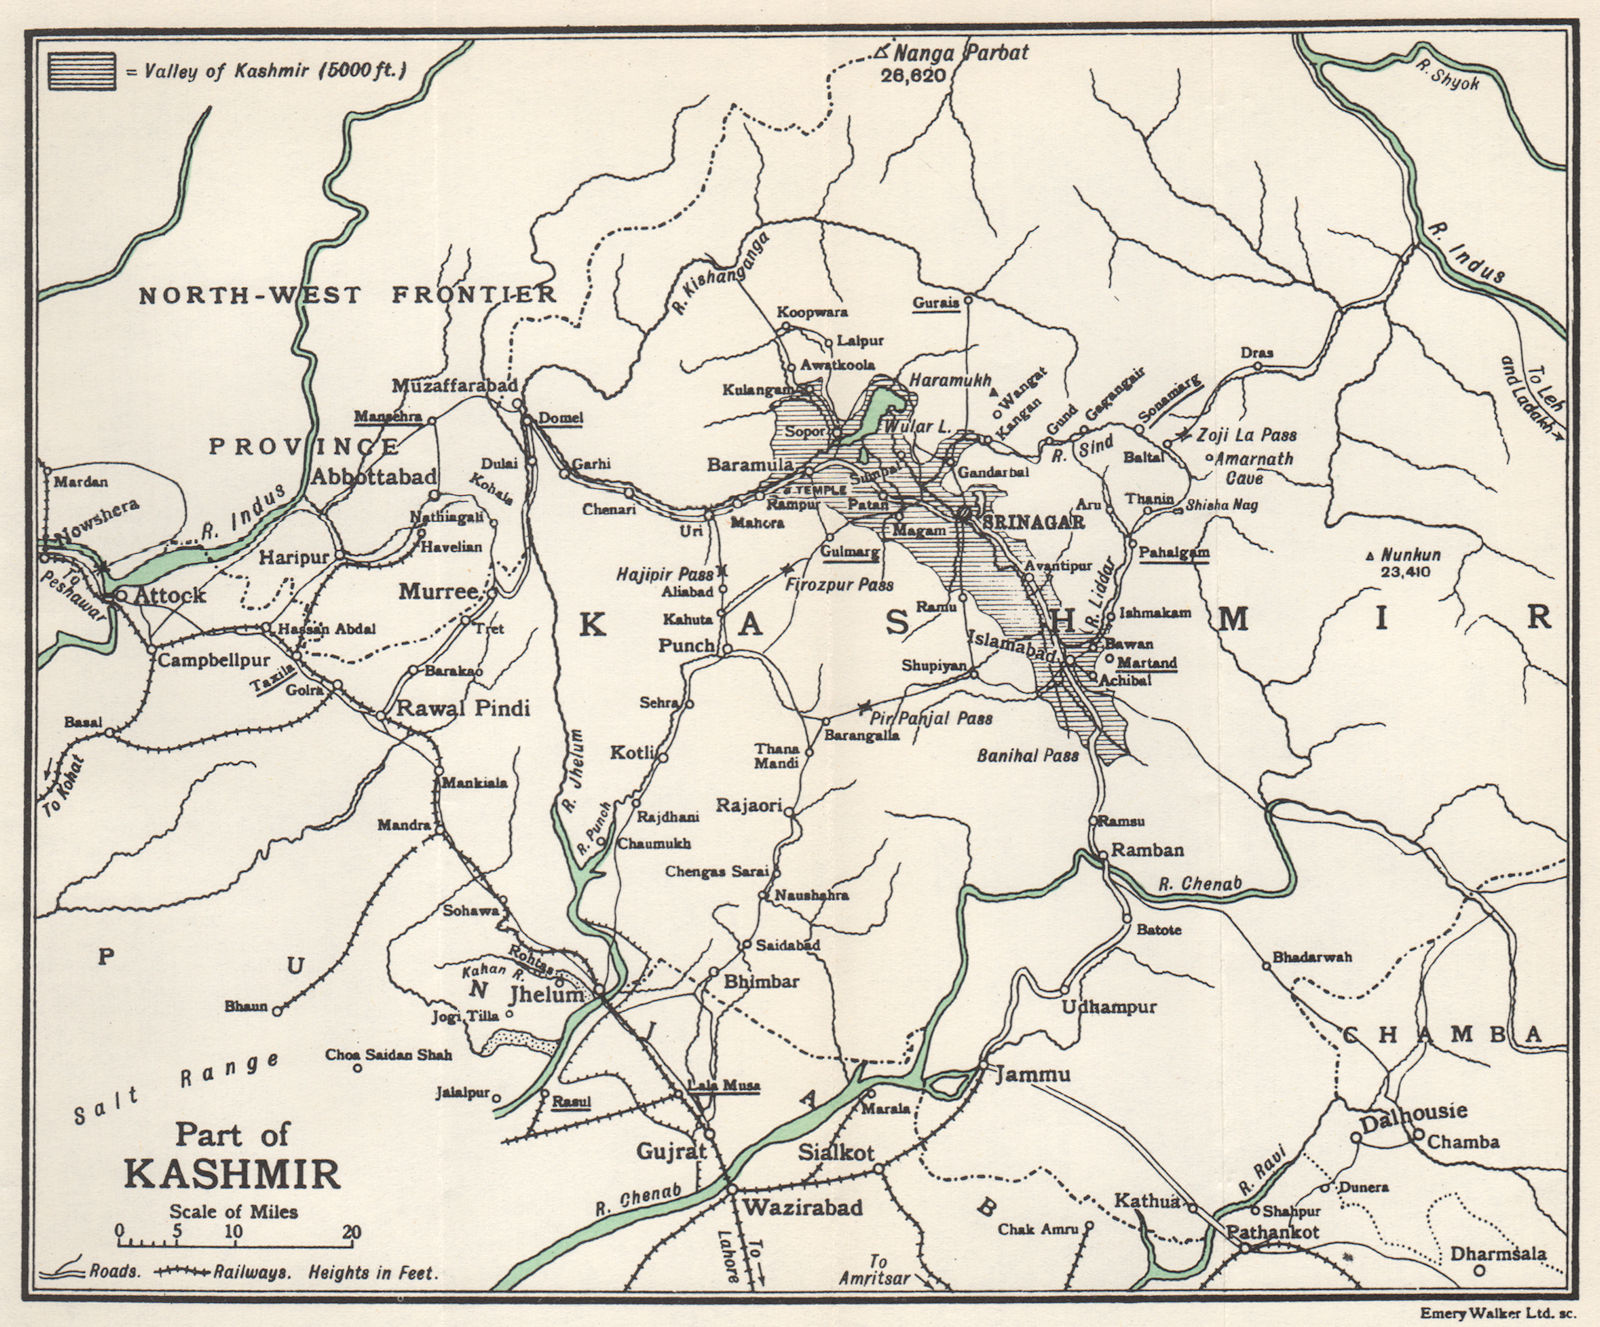 SRINAGAR. Rawalpindi. Kashmir & Punjab. India/Pakistan 1965 old vintage map